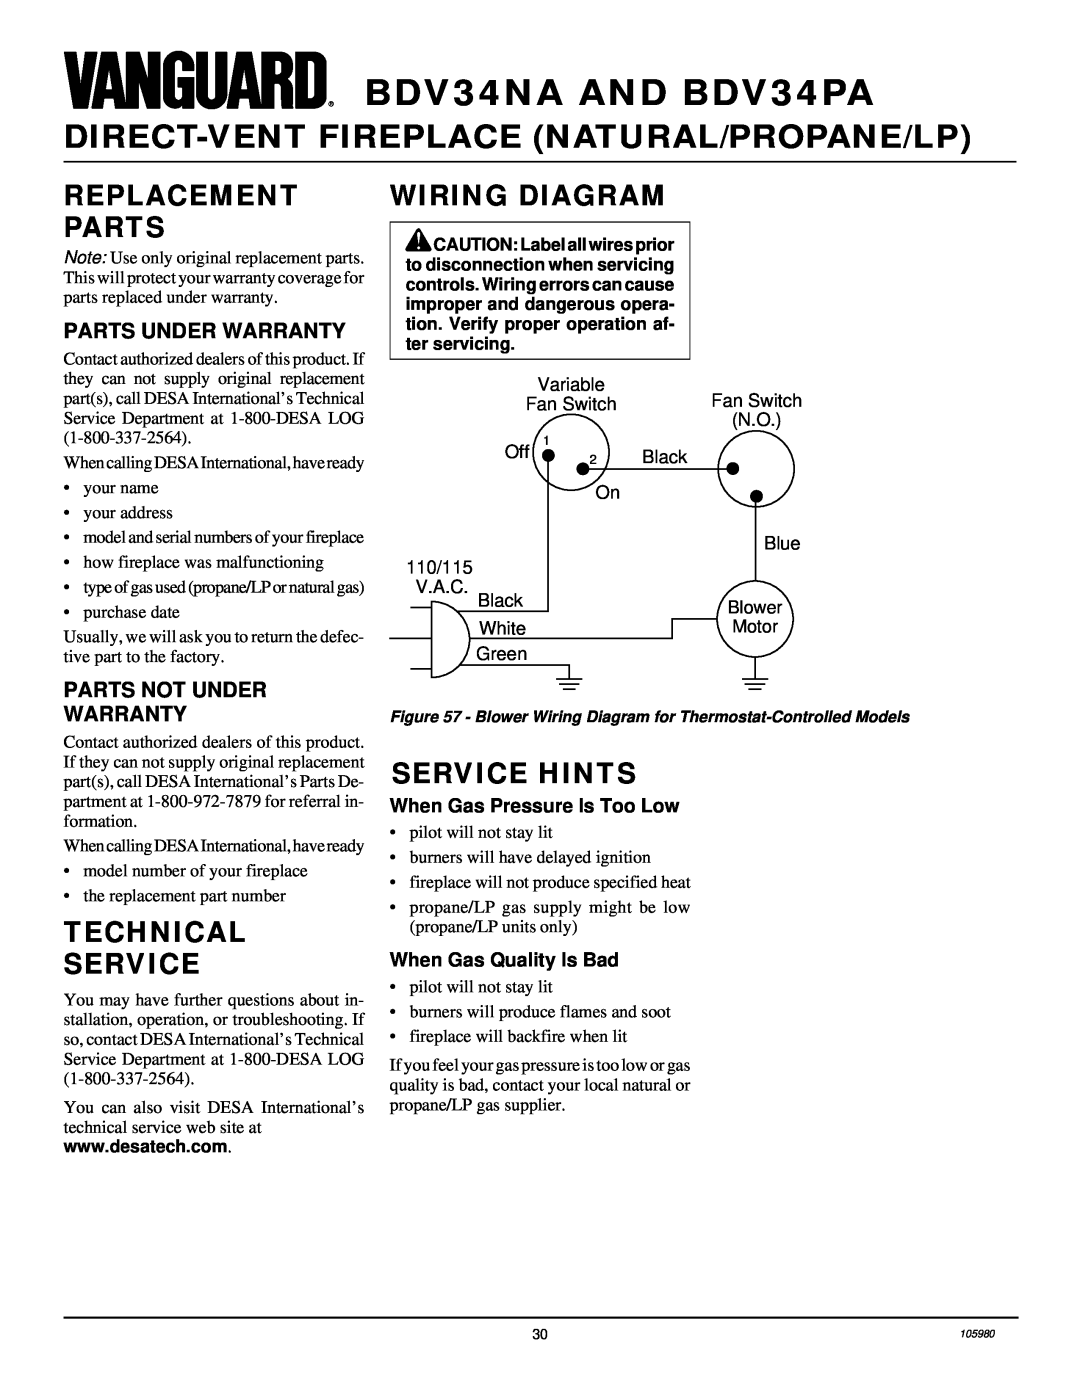 Desa BDV34PA, BDV34NA Replacement Parts, Wiring Diagram, Technical Service, Service Hints, Parts Under Warranty 